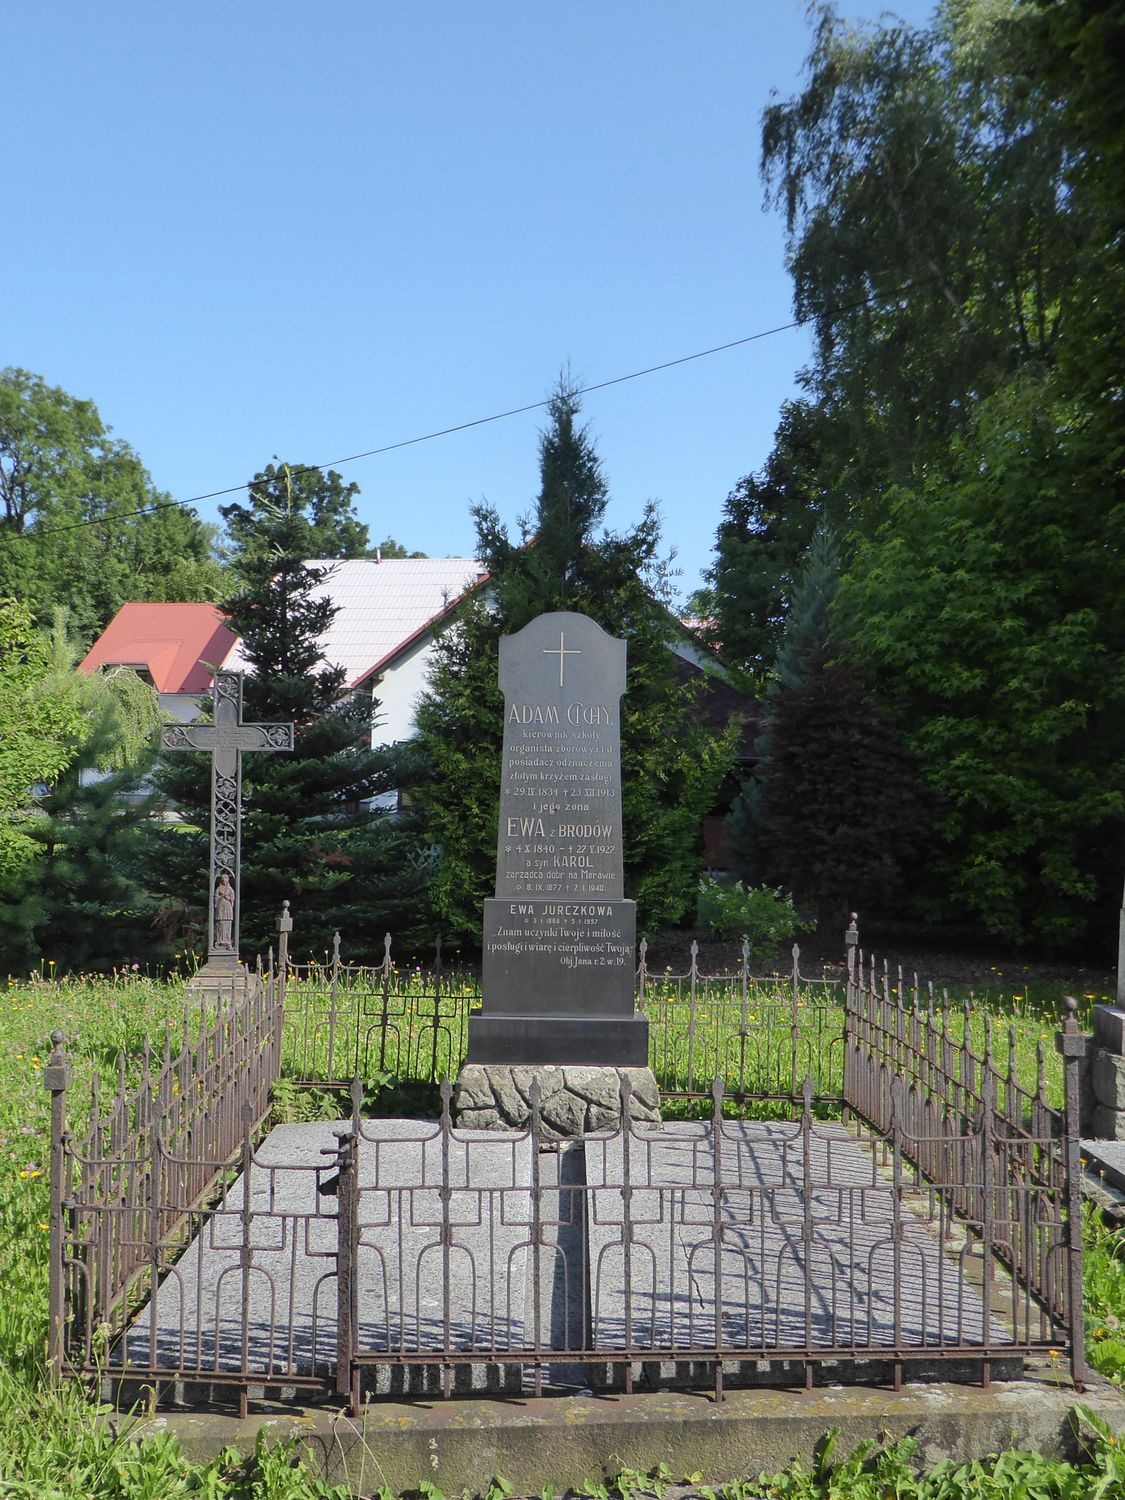 Tomb of Adam Cichy, Ewa Cichy, Karol Cichy and Ewa Jurczkowa from the cemetery of the Czech part of Těšín Silesia, as of 2022.